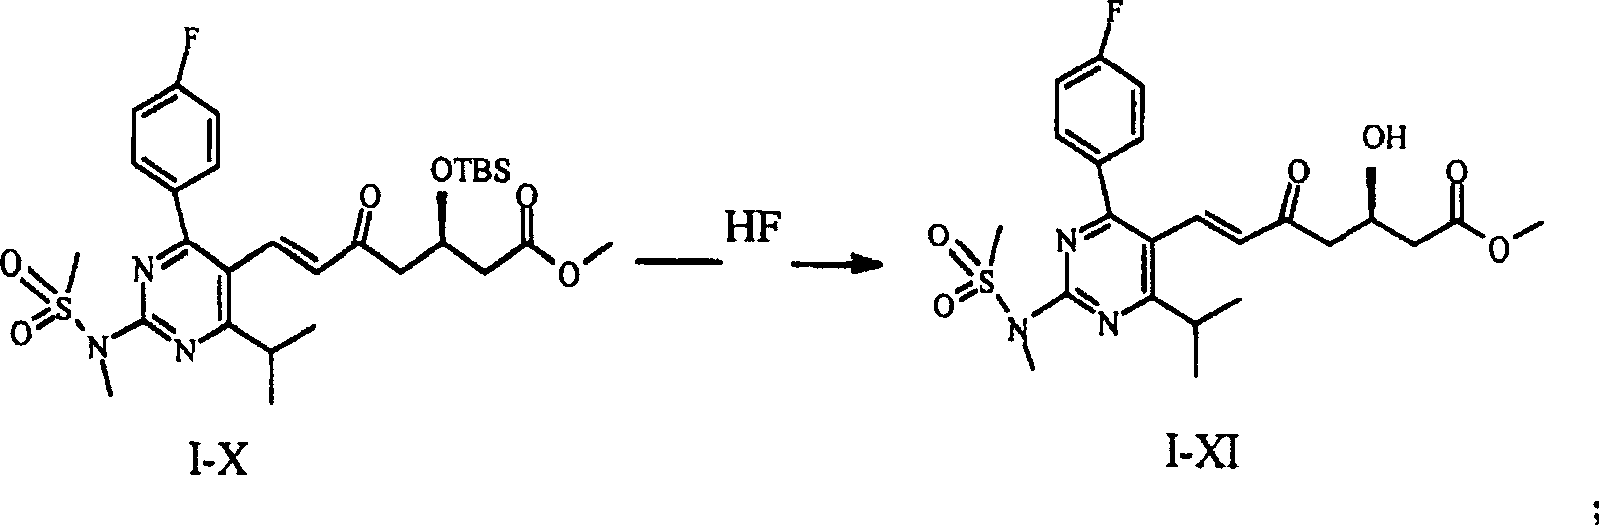 Method for preparing Rosuvastatin Calcium and key intermediate